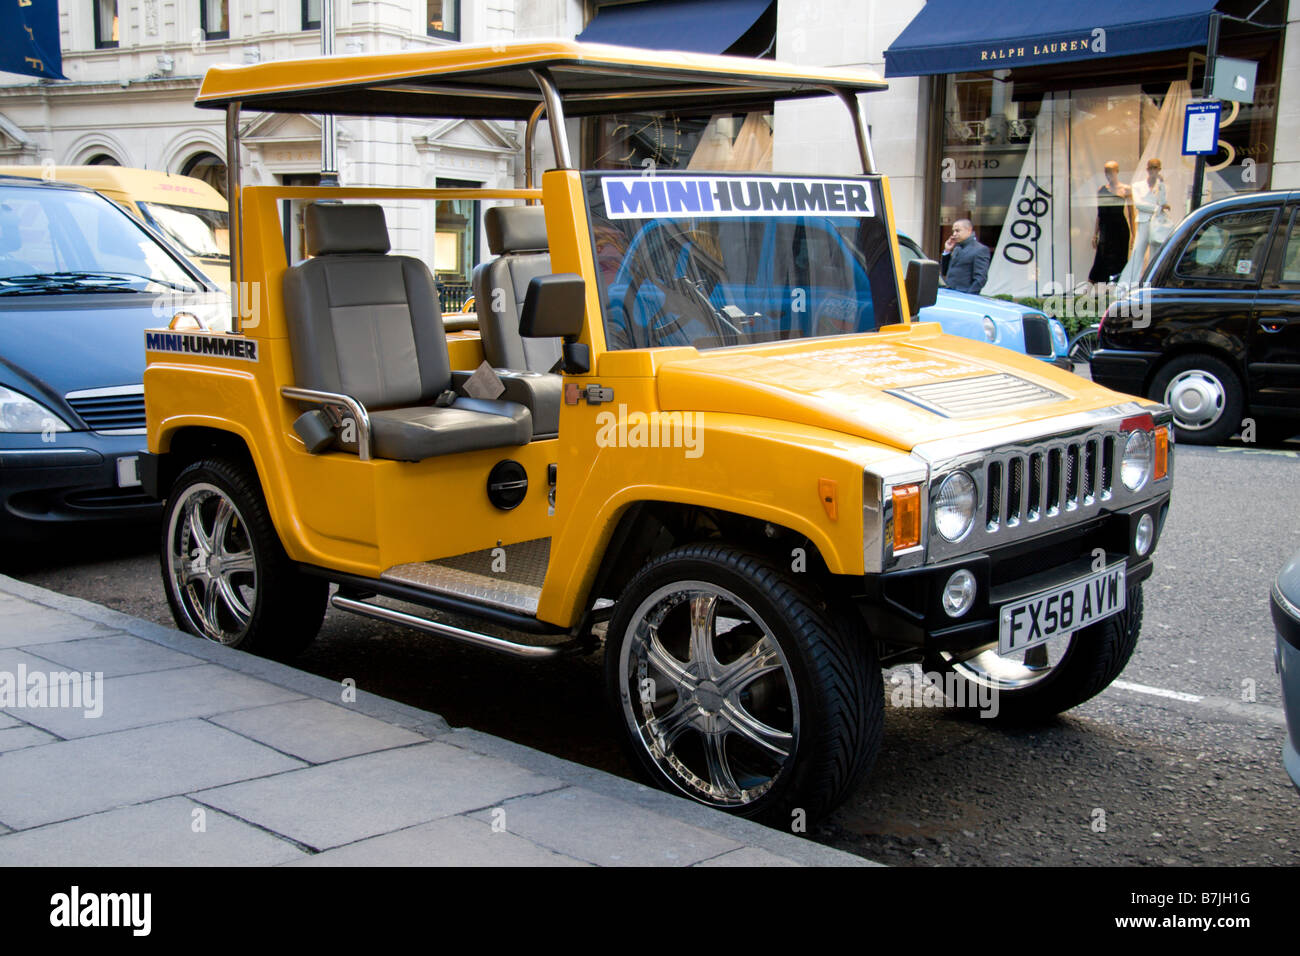 A mini Hummer vehicle parked on New Bond Street, London. Jan 2009 Stock Photo